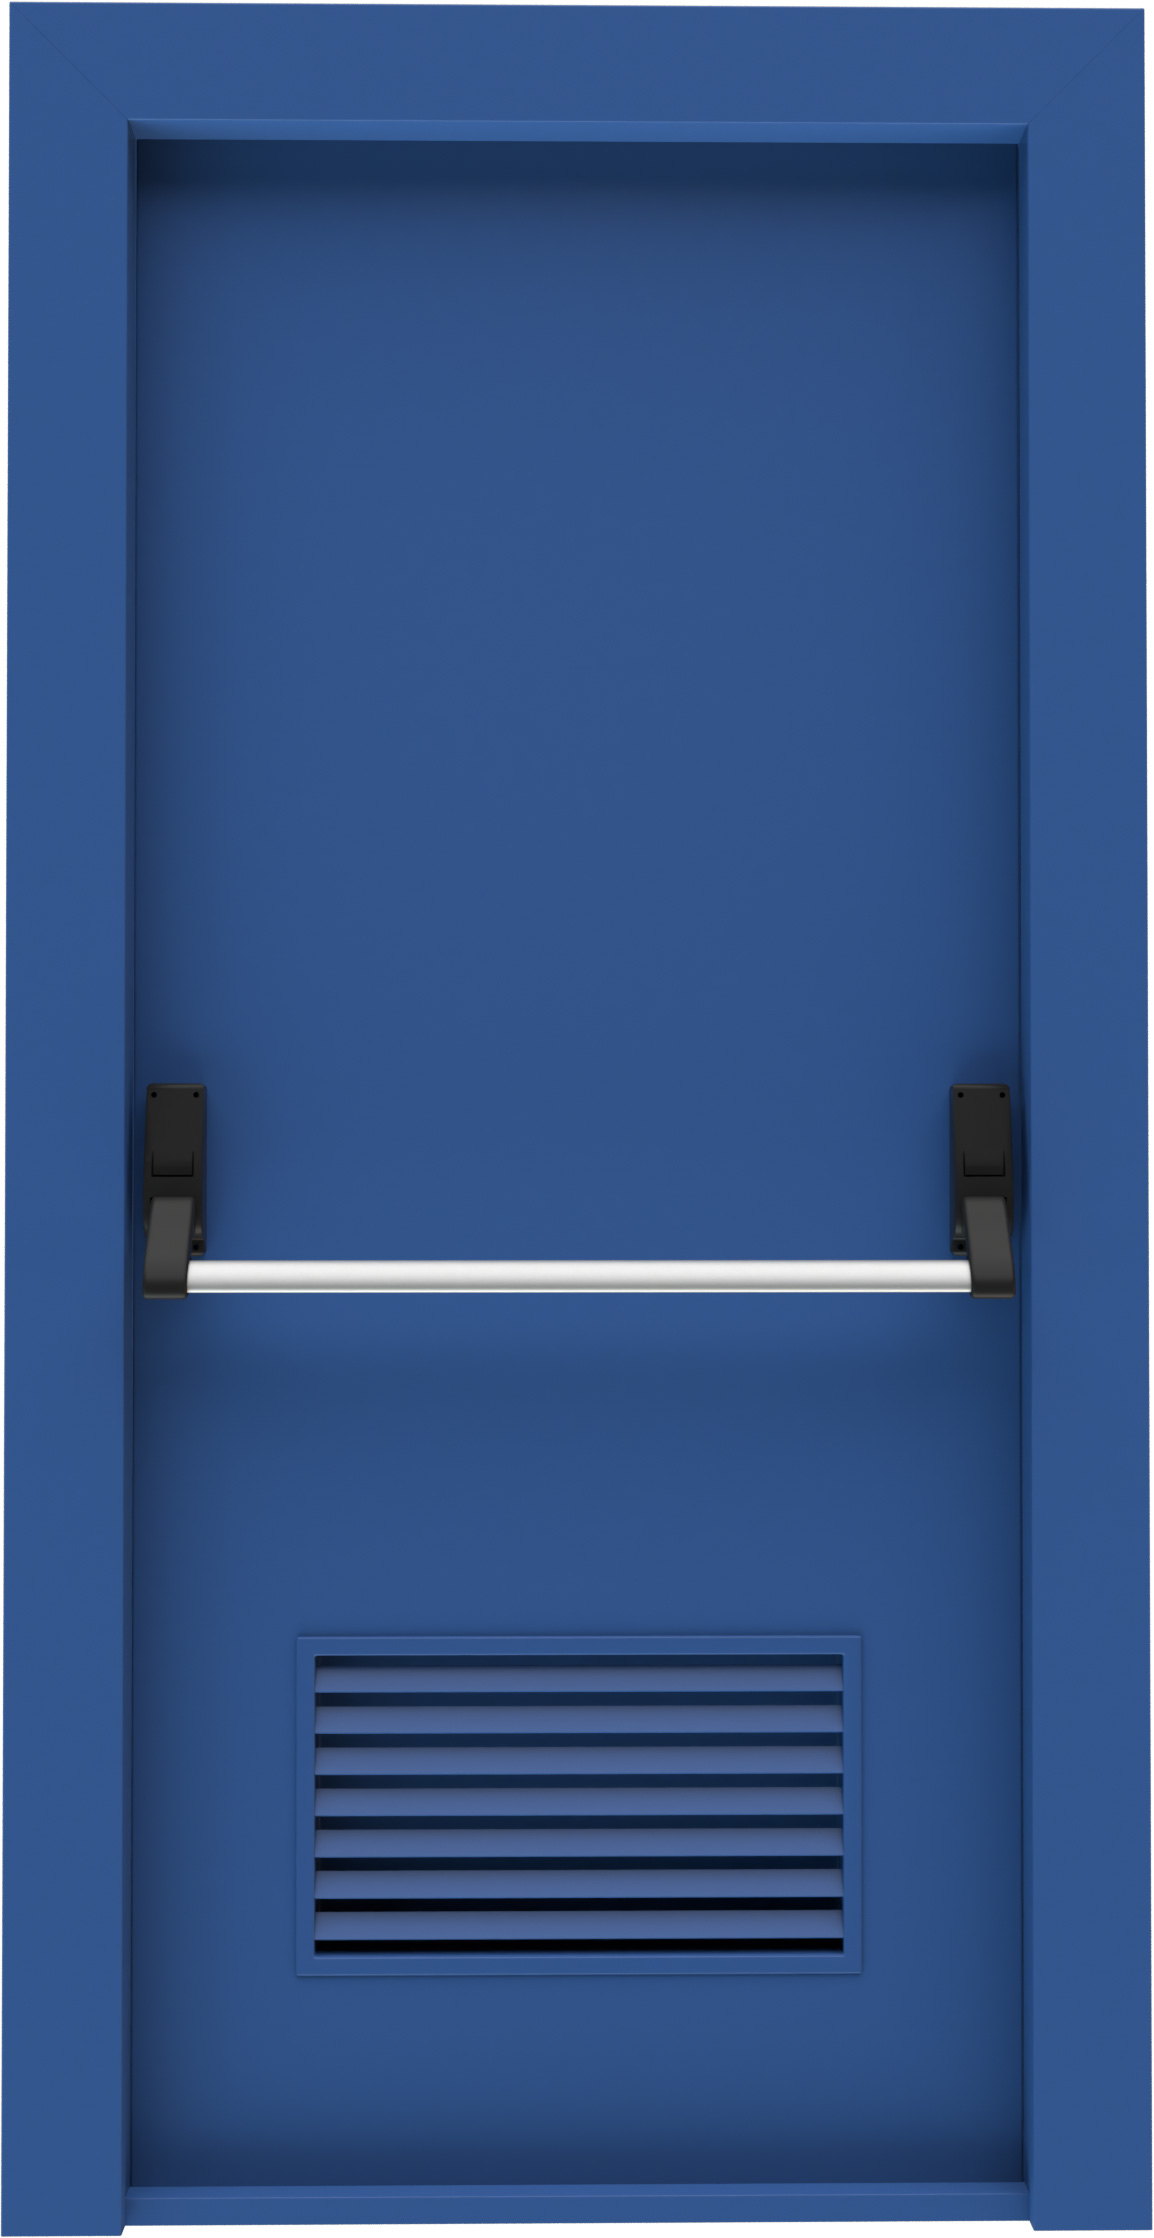 Mavi Menfezli Acil Durum Kapısı